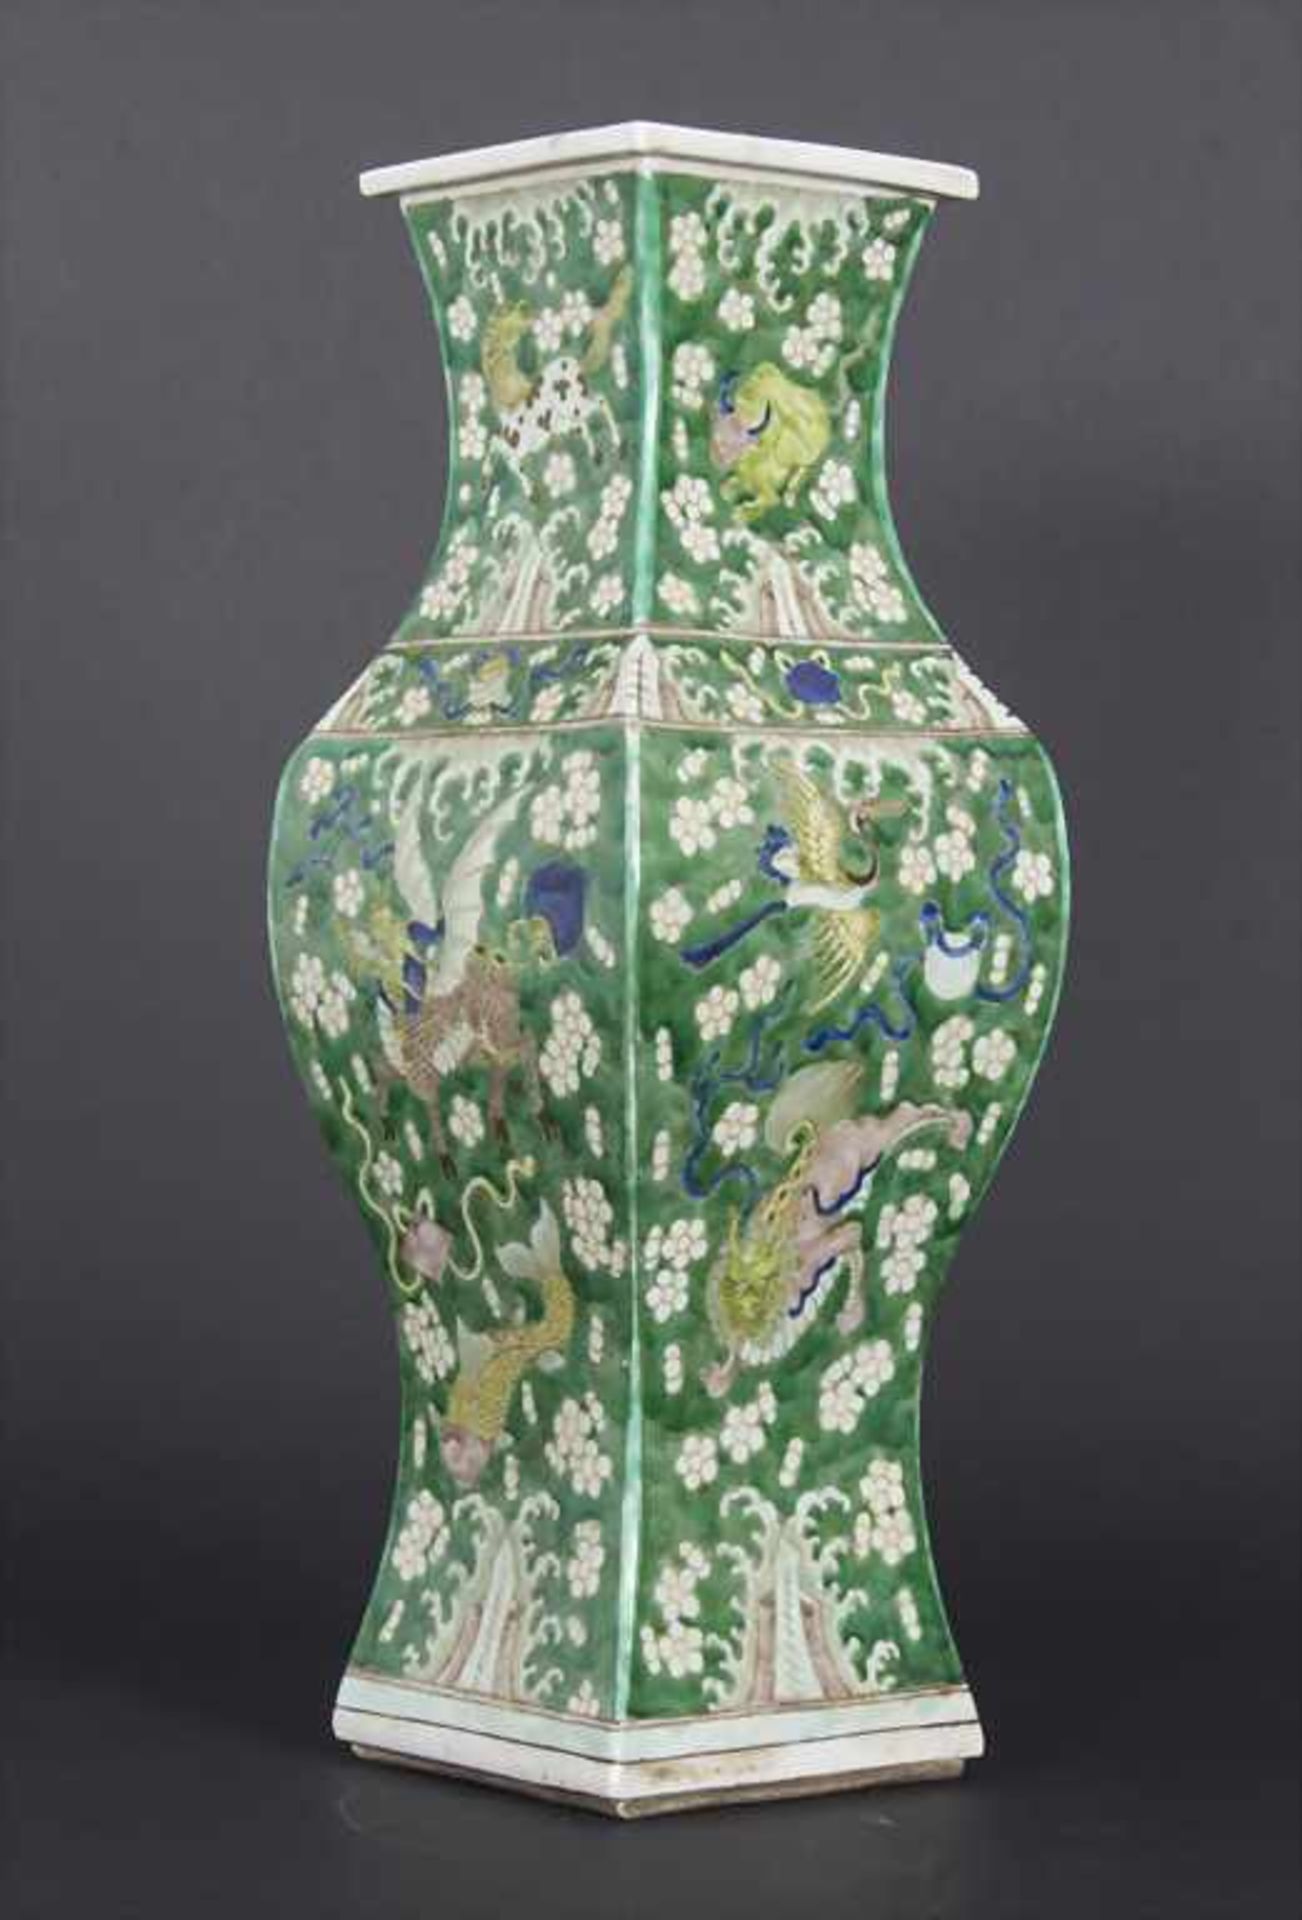 Ziervase, China, späte Qing-Dynastie, 19./20. Jh.Material: Porzellan, polychrom bemalt,Marke/